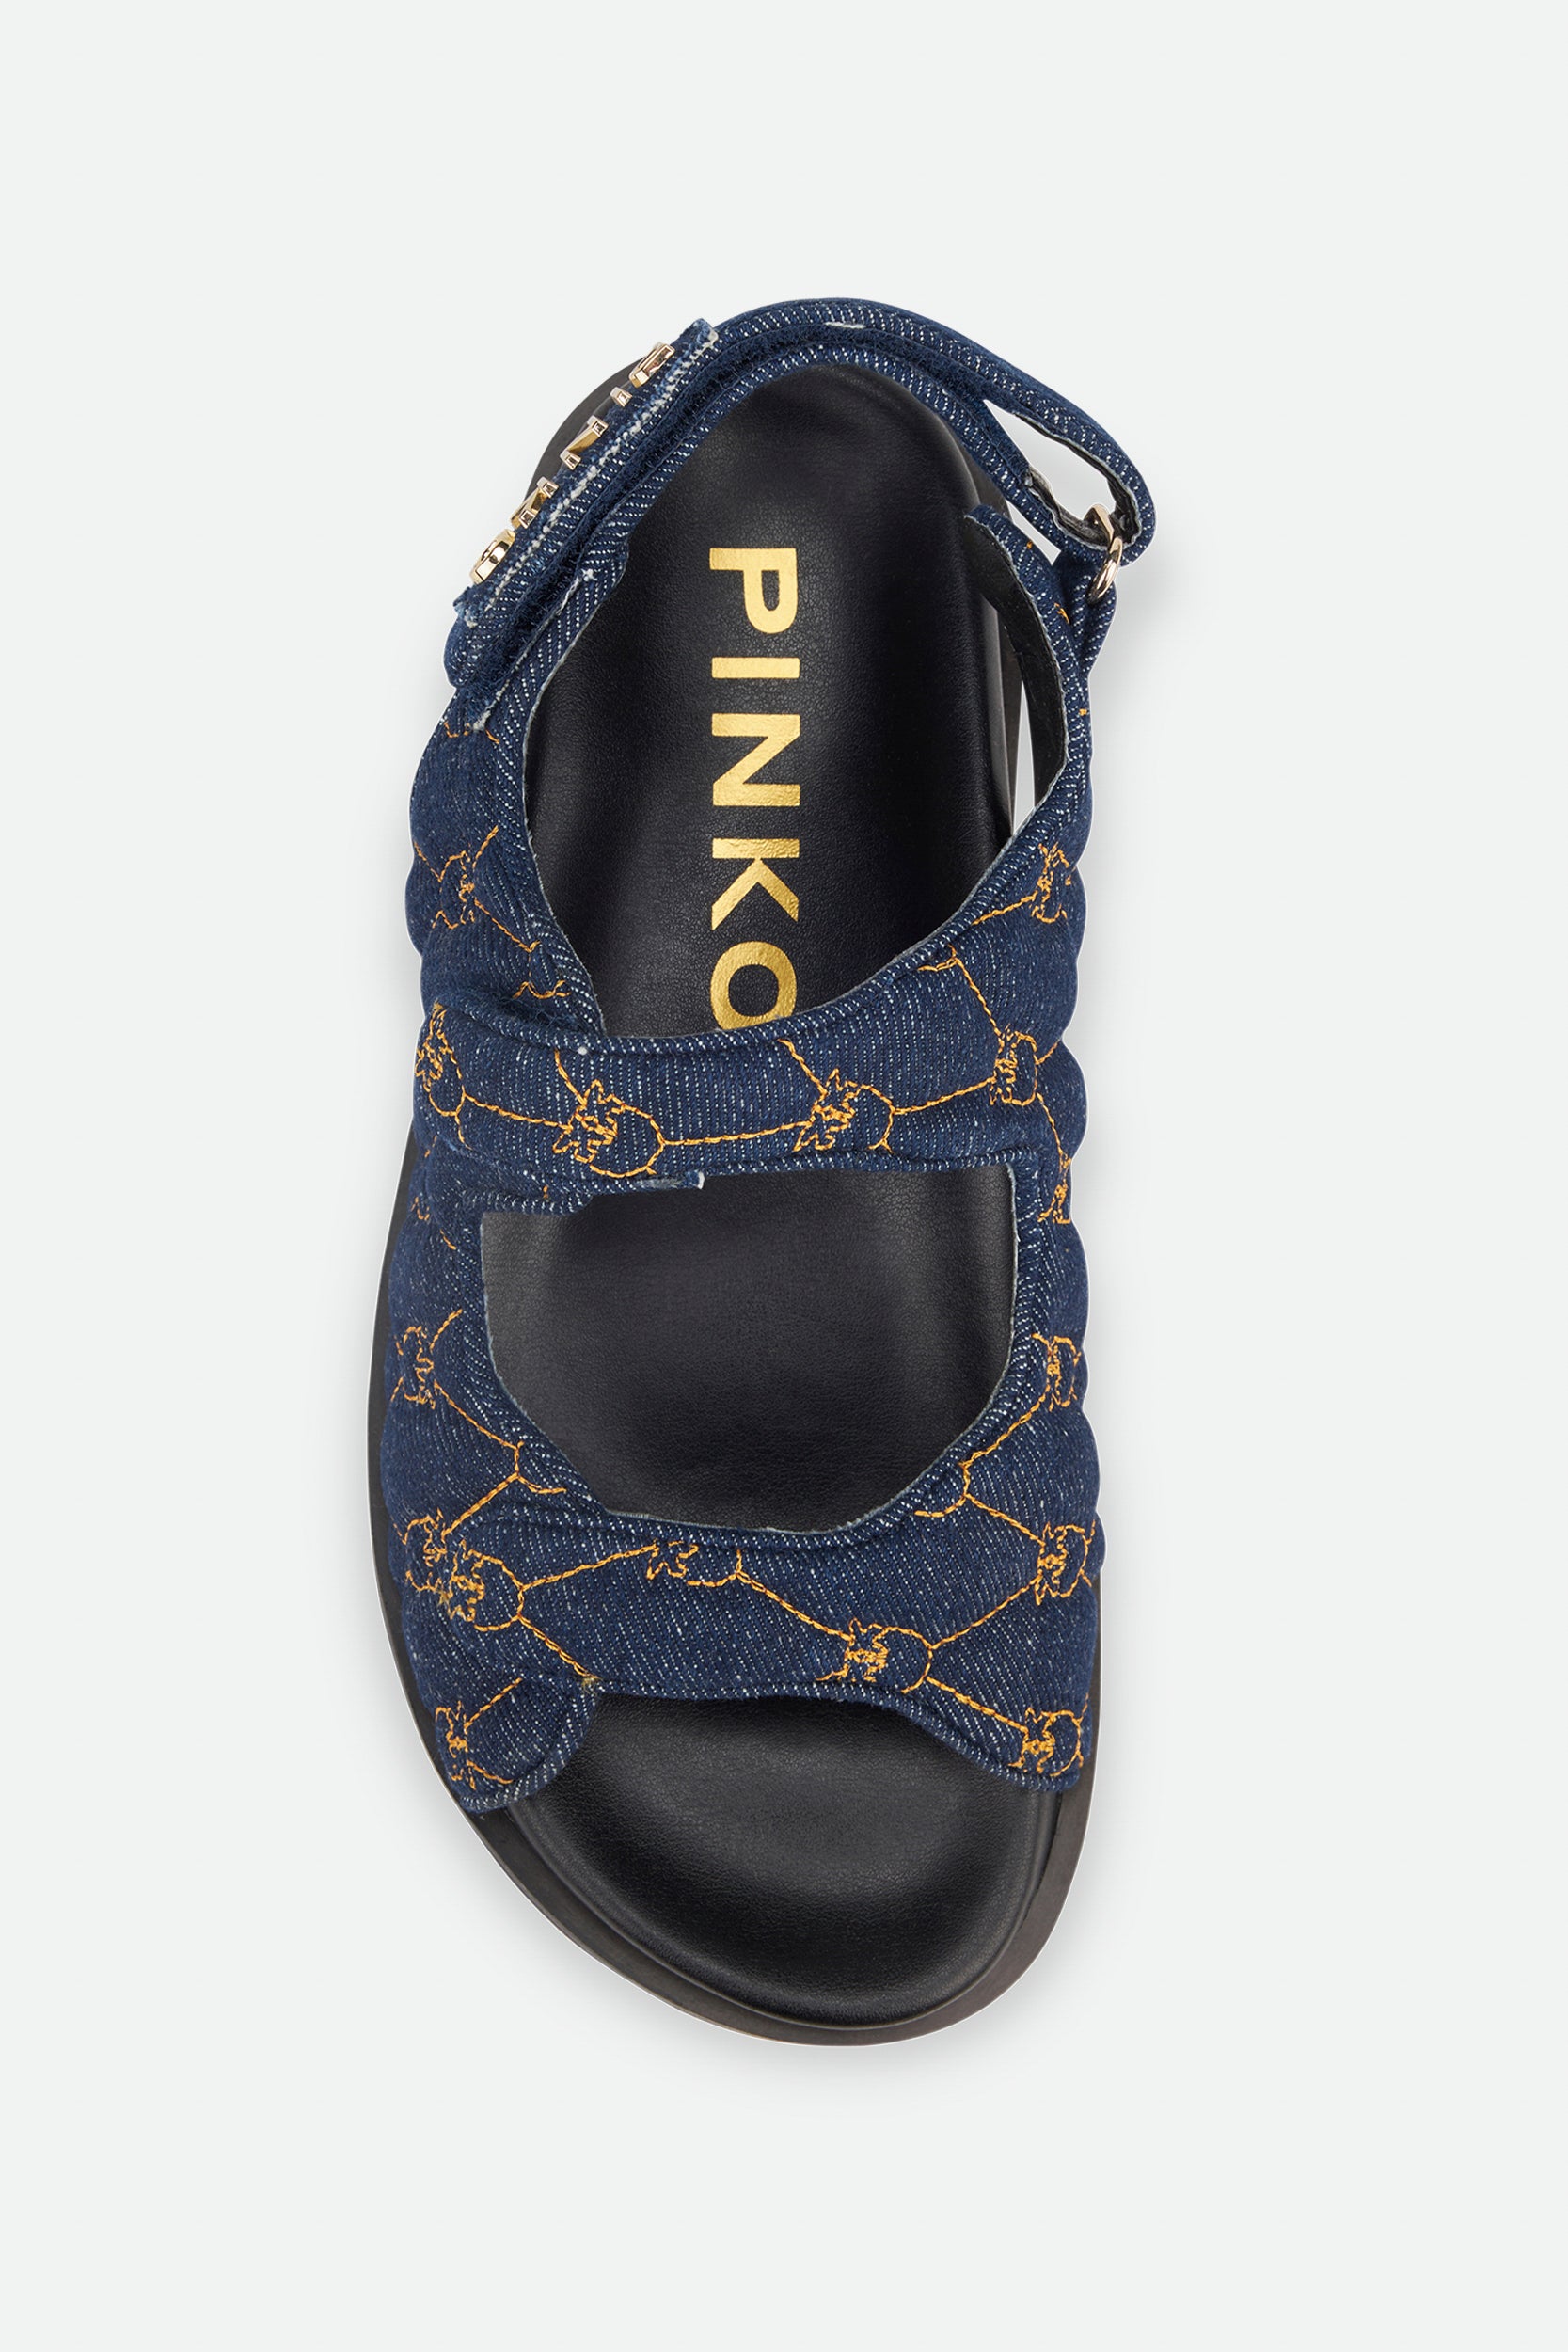 Pinko Blue Logo Sandal